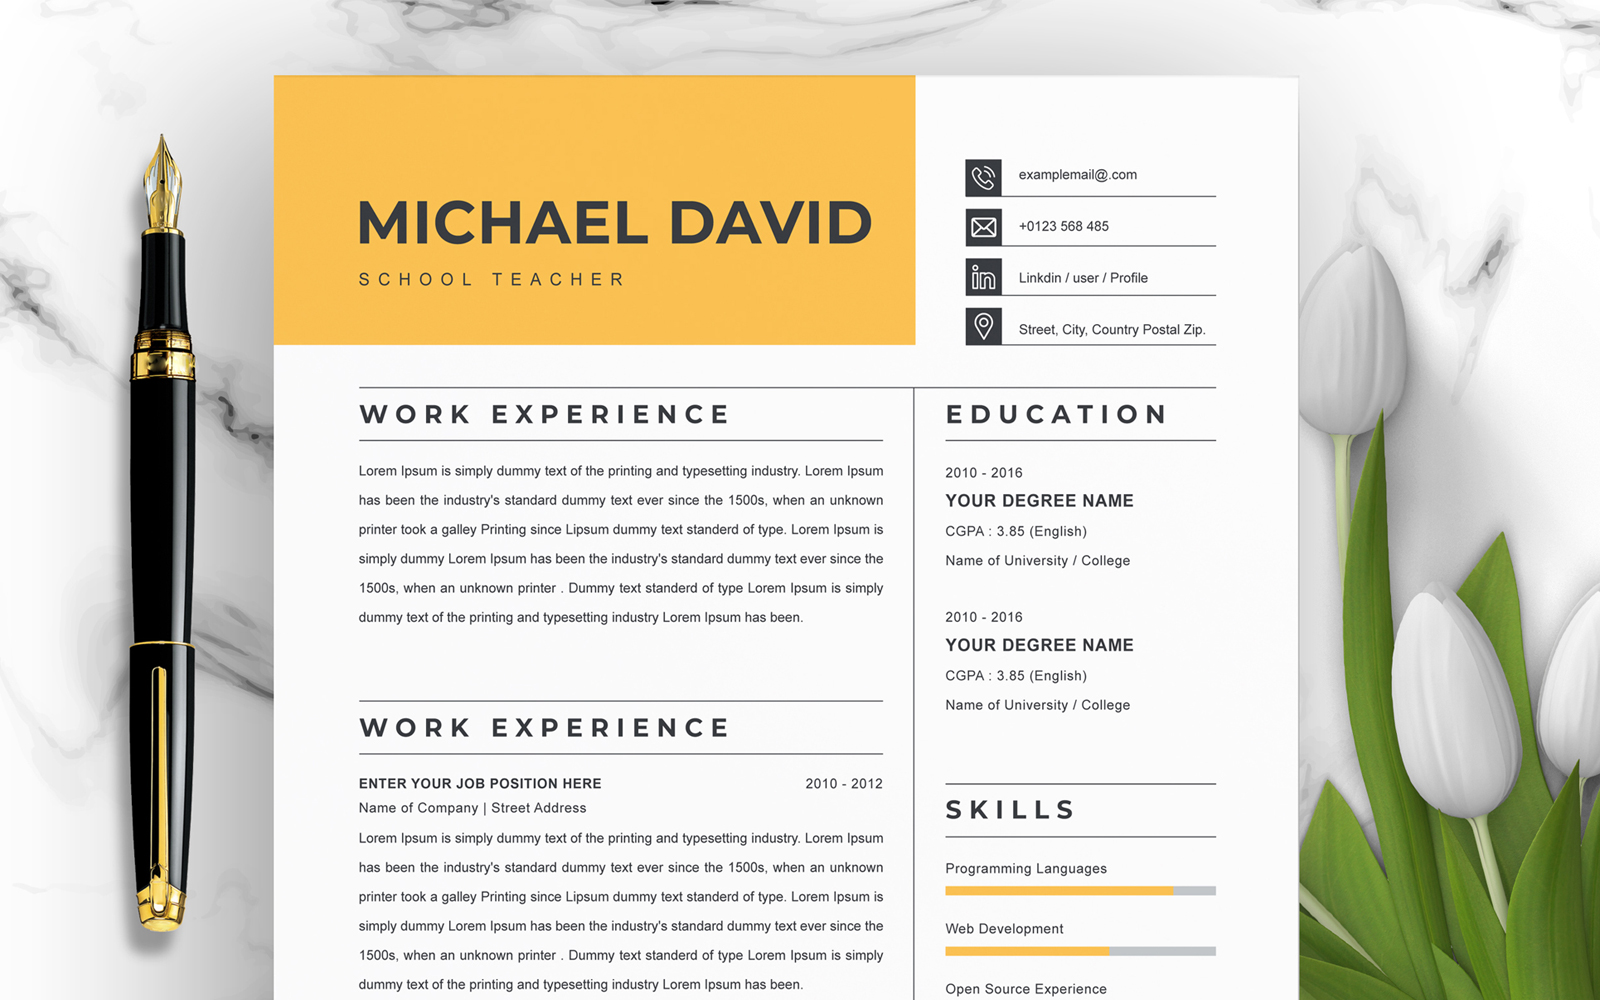 Michael David / Resume Template